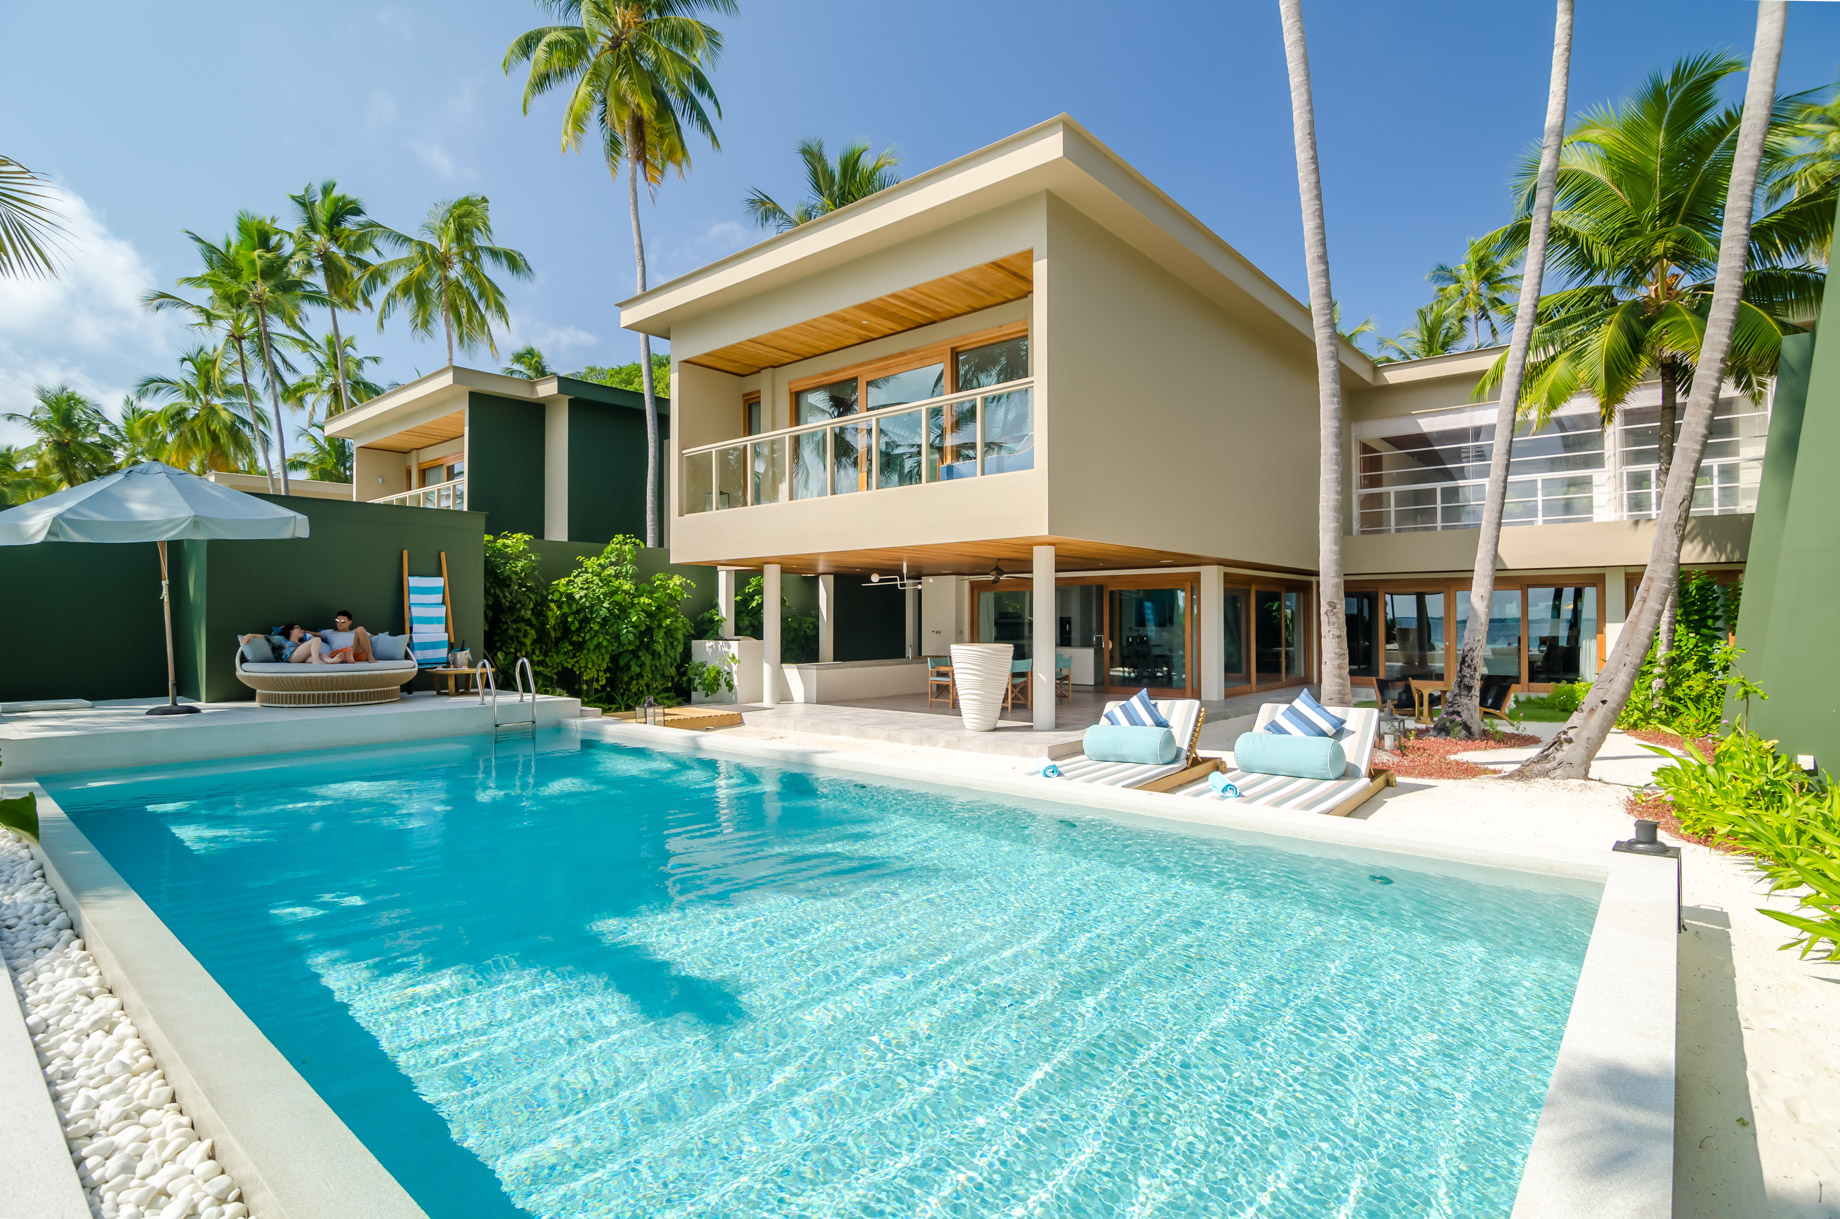 Amilla Fushi Resort and Residences – Baa Atoll, Maldives – Oceanfront Beach Villa Pool Deck